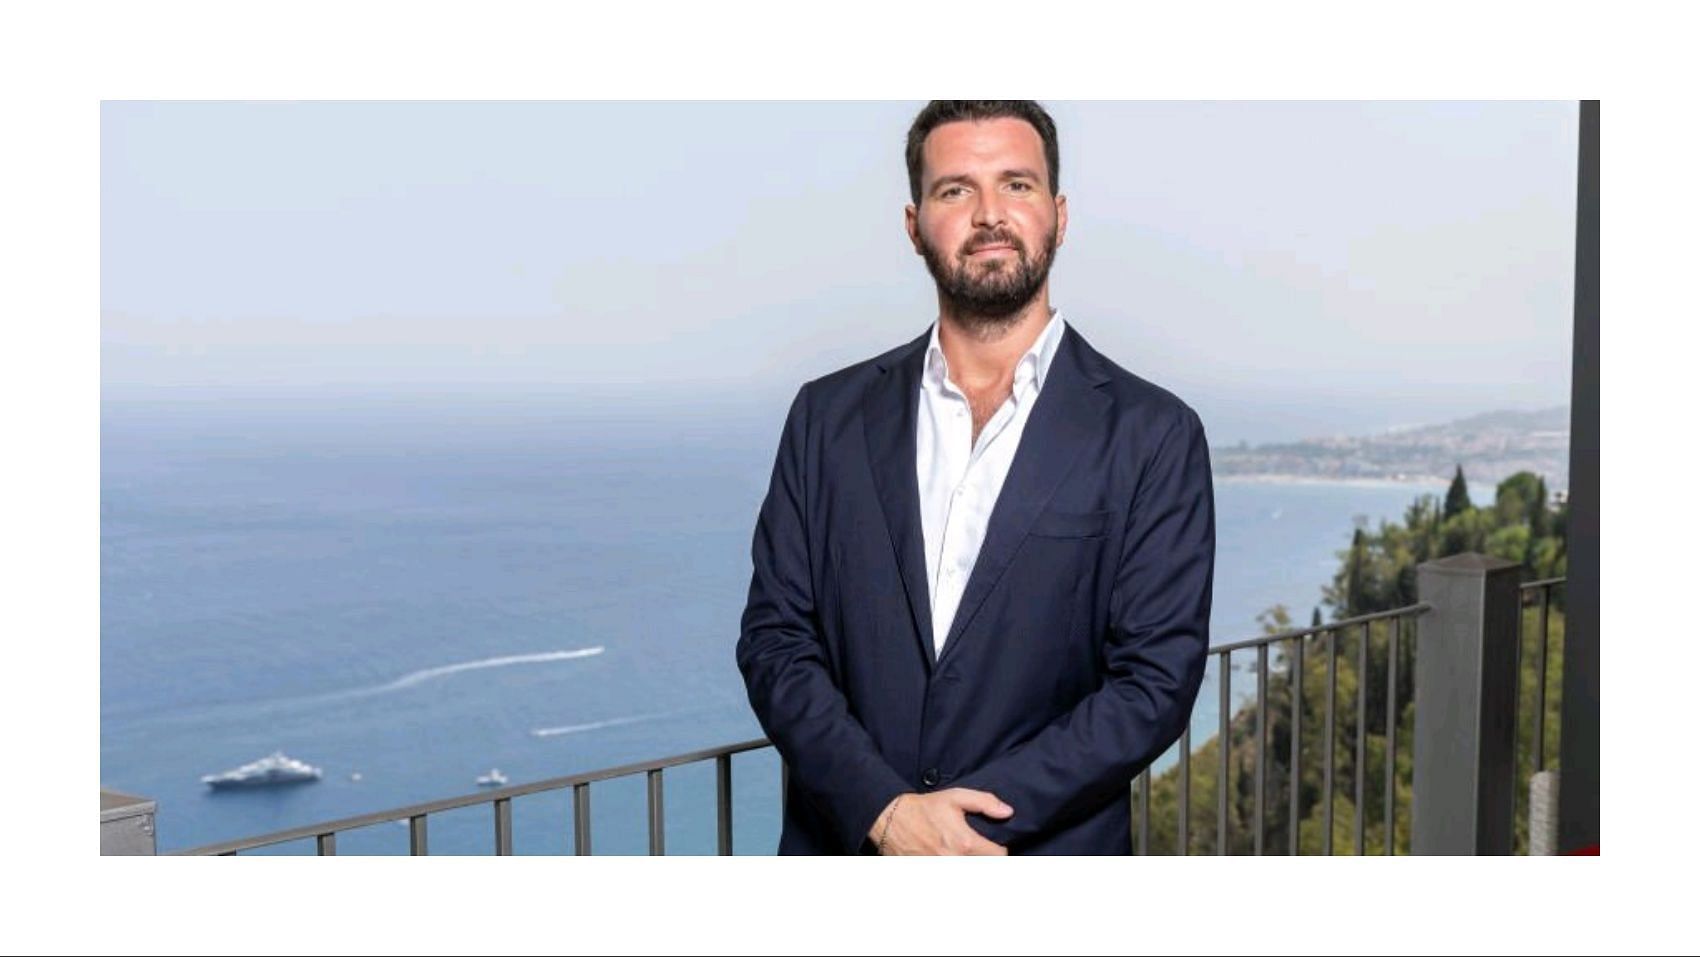 Andrea Iervolino is a famous producer, entrepreneur and businessman (Image via Daniele Venturelli/Getty Images)